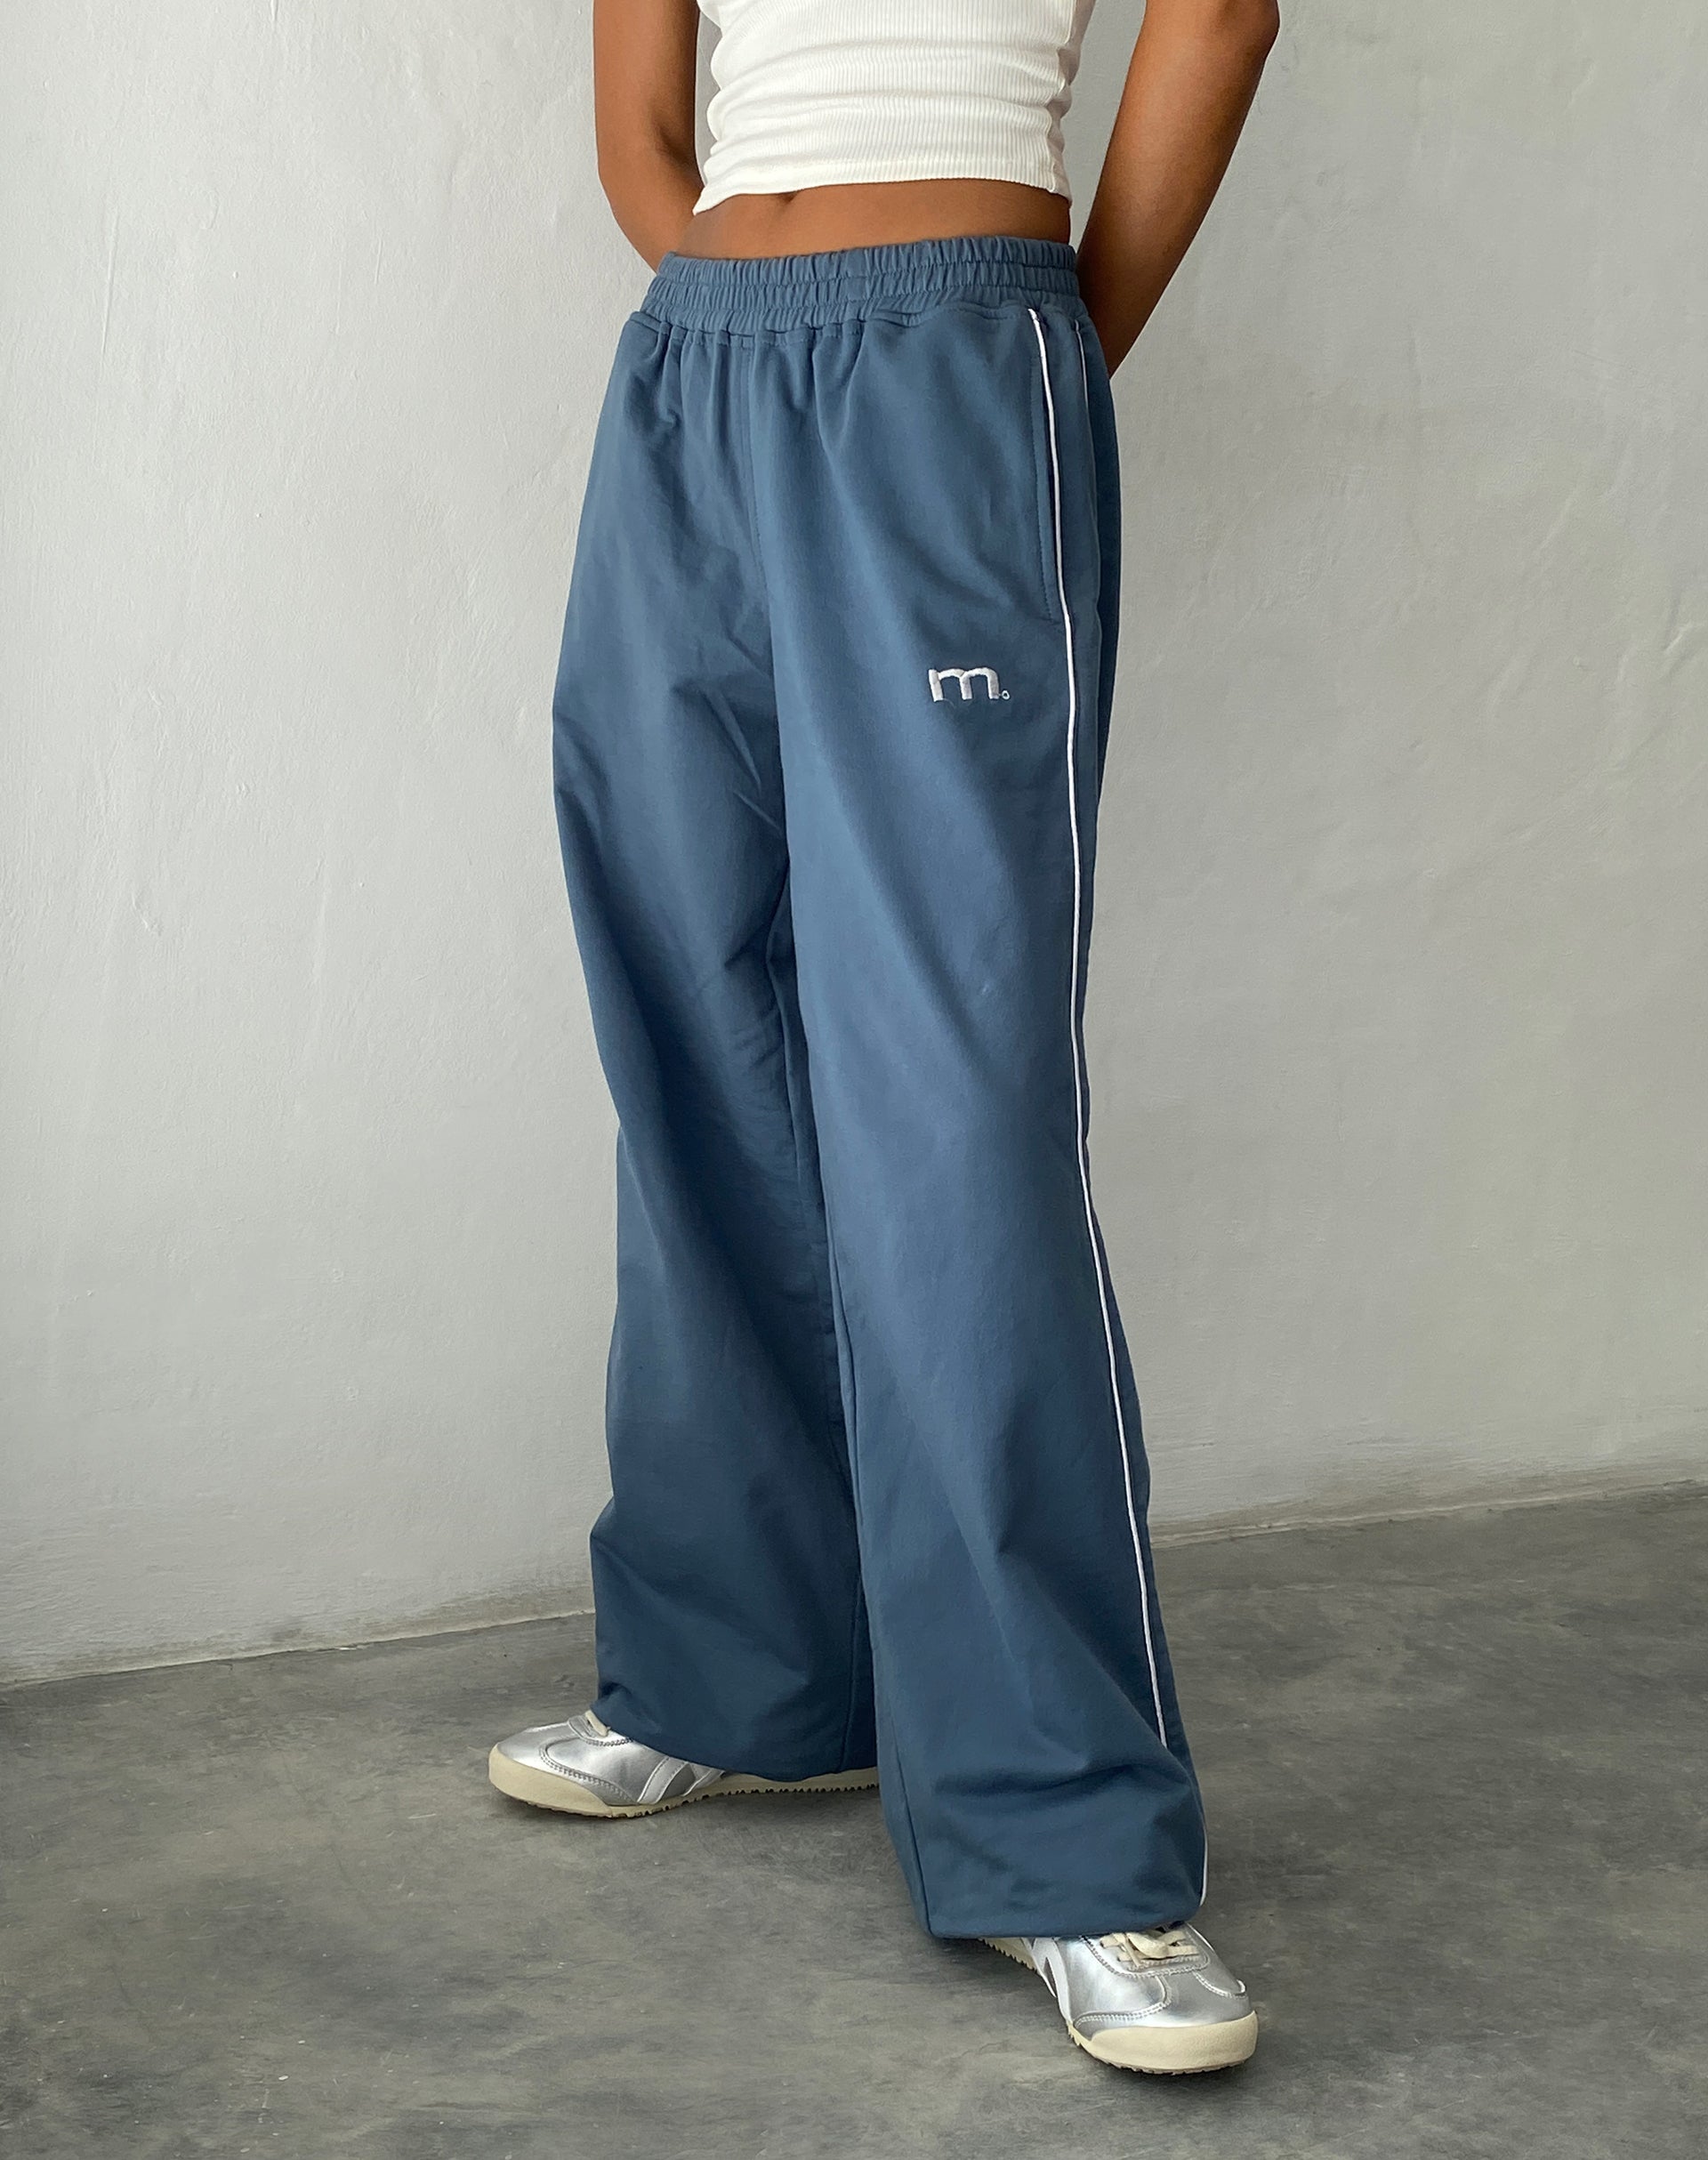 Adidas Women's Gray Sweatpants/ Joggers Size - Depop